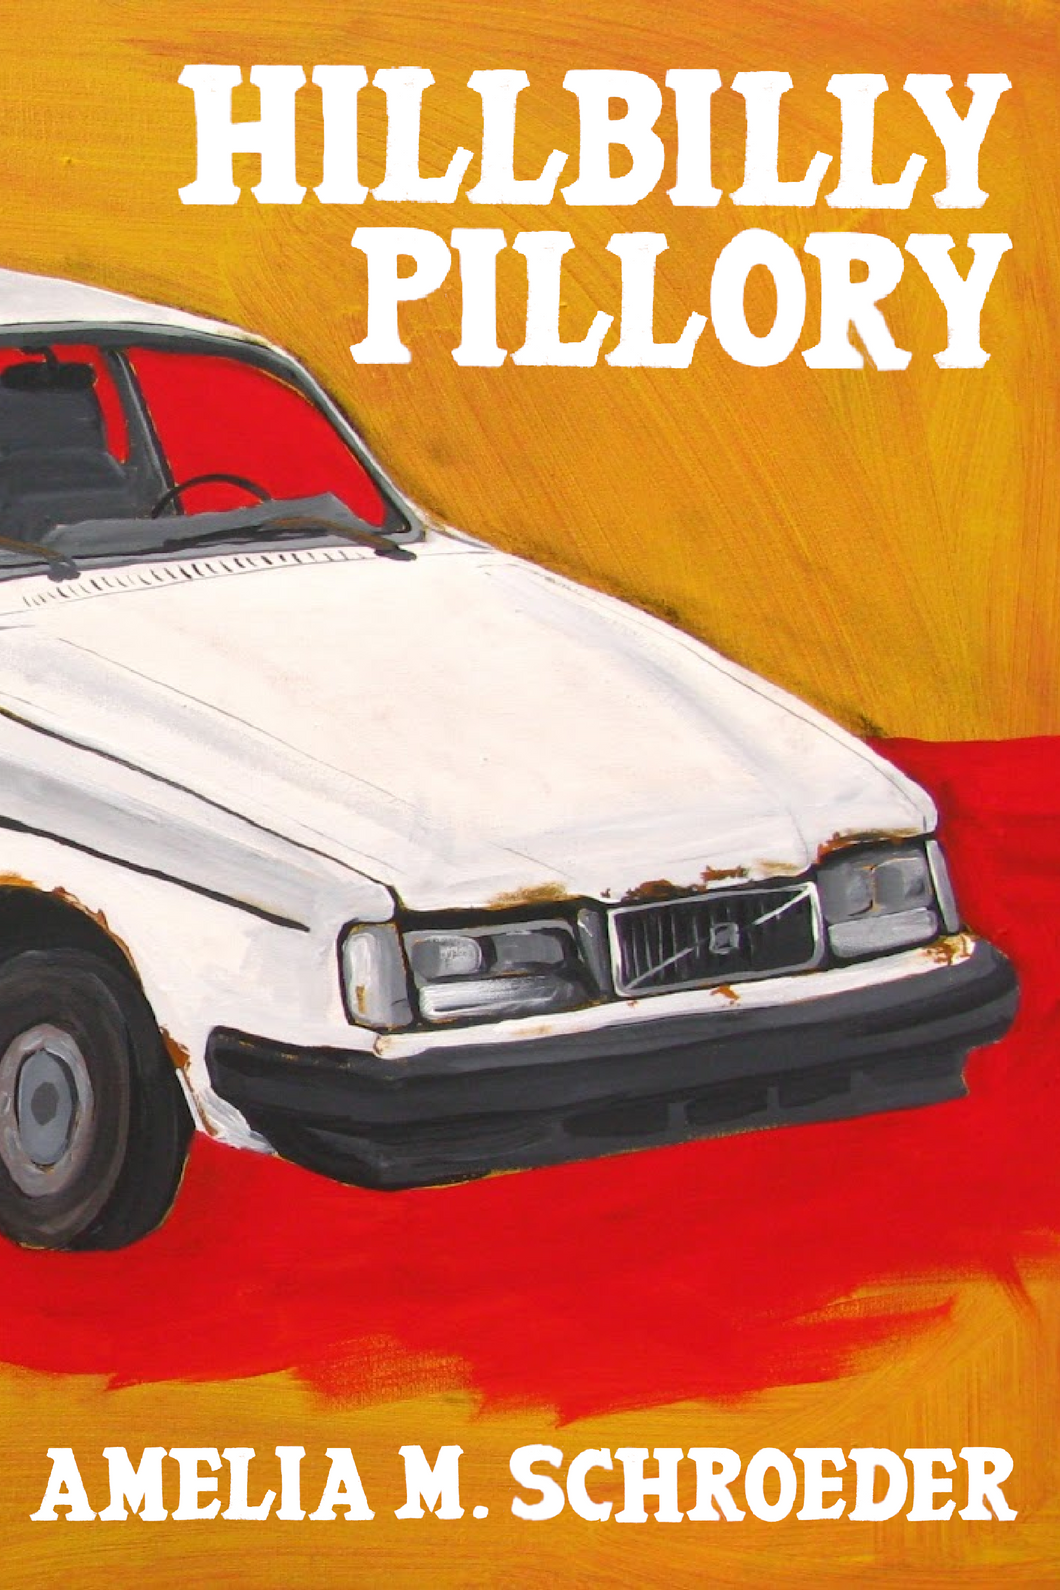 Hillbilly Pillory, by Amelia M. Schroeder-Print Books-Bottlecap Press